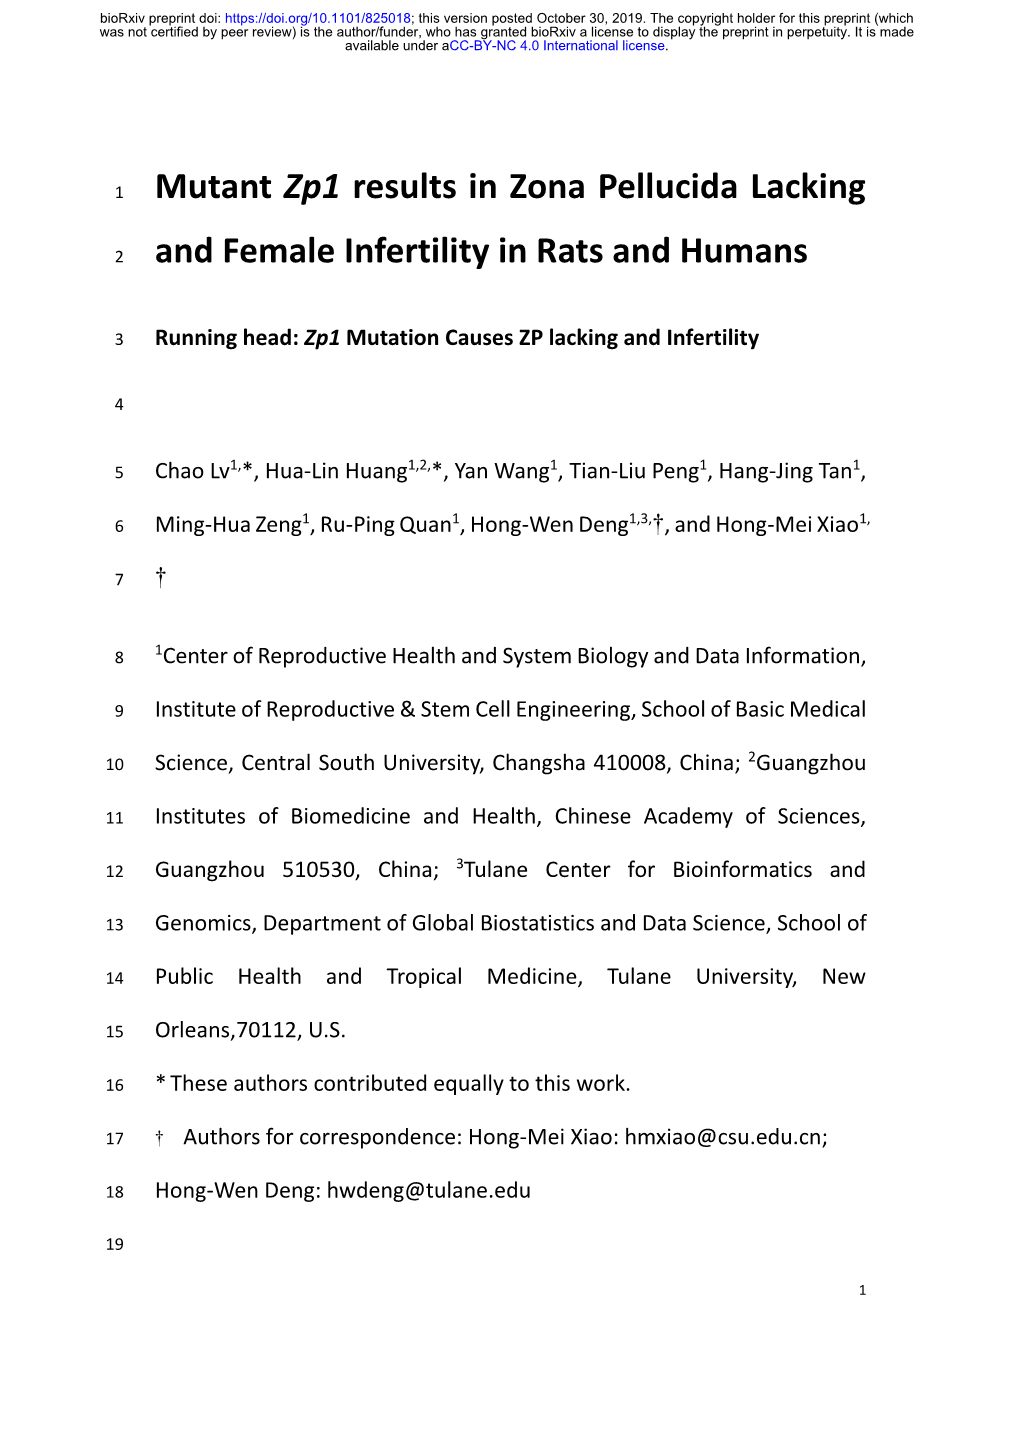 Mutant Zp1 Results in Zona Pellucida Lacking and Female Infertility In